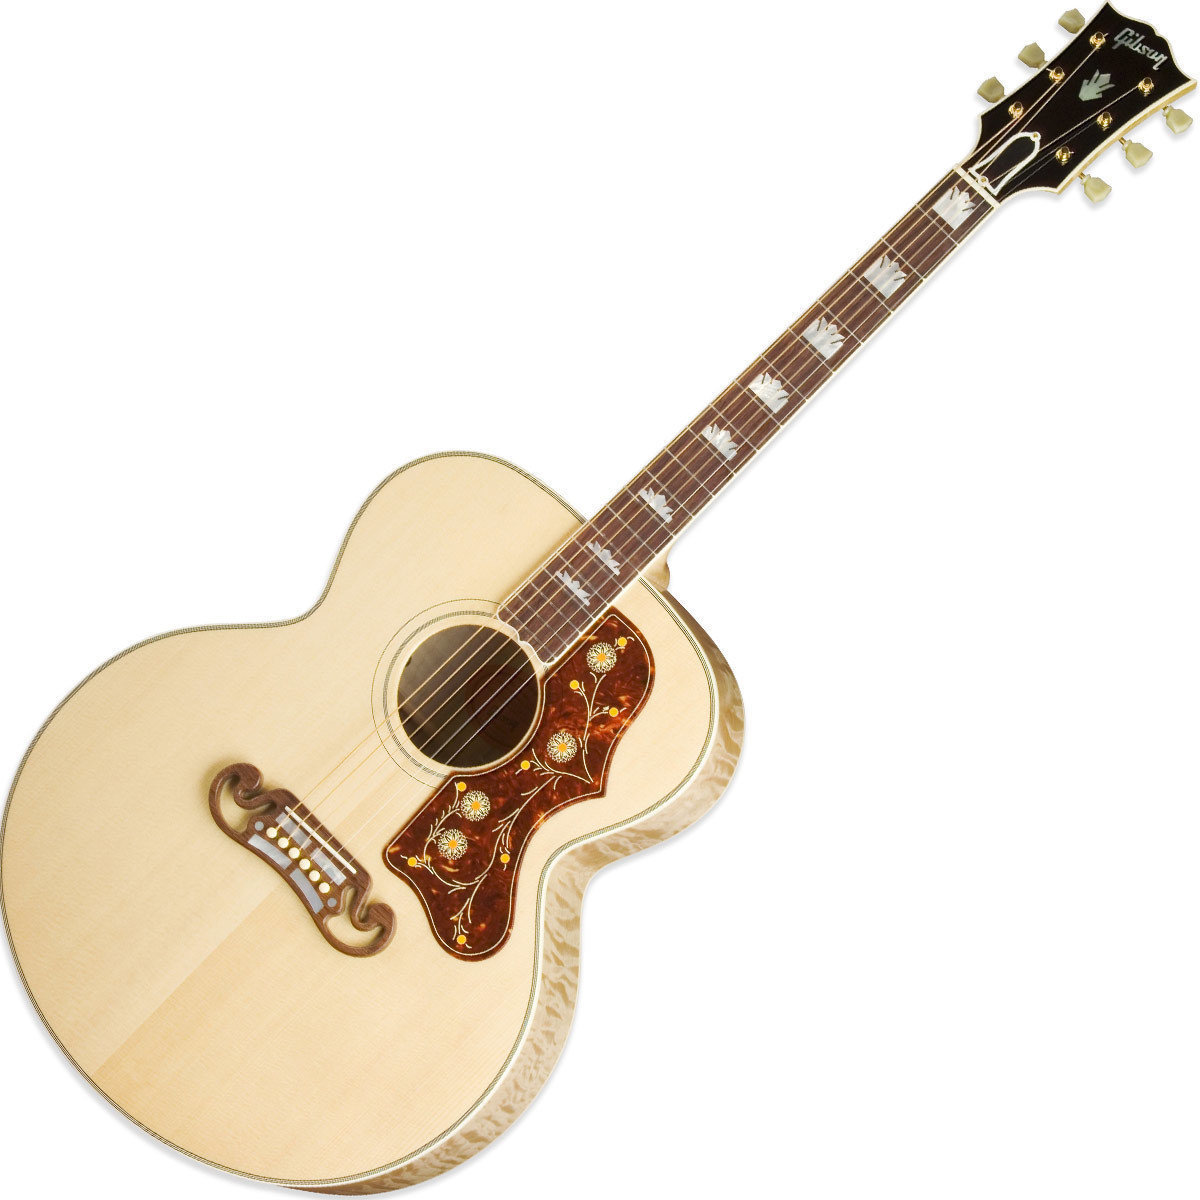 Jumbo Guitar Gibson SJ 200